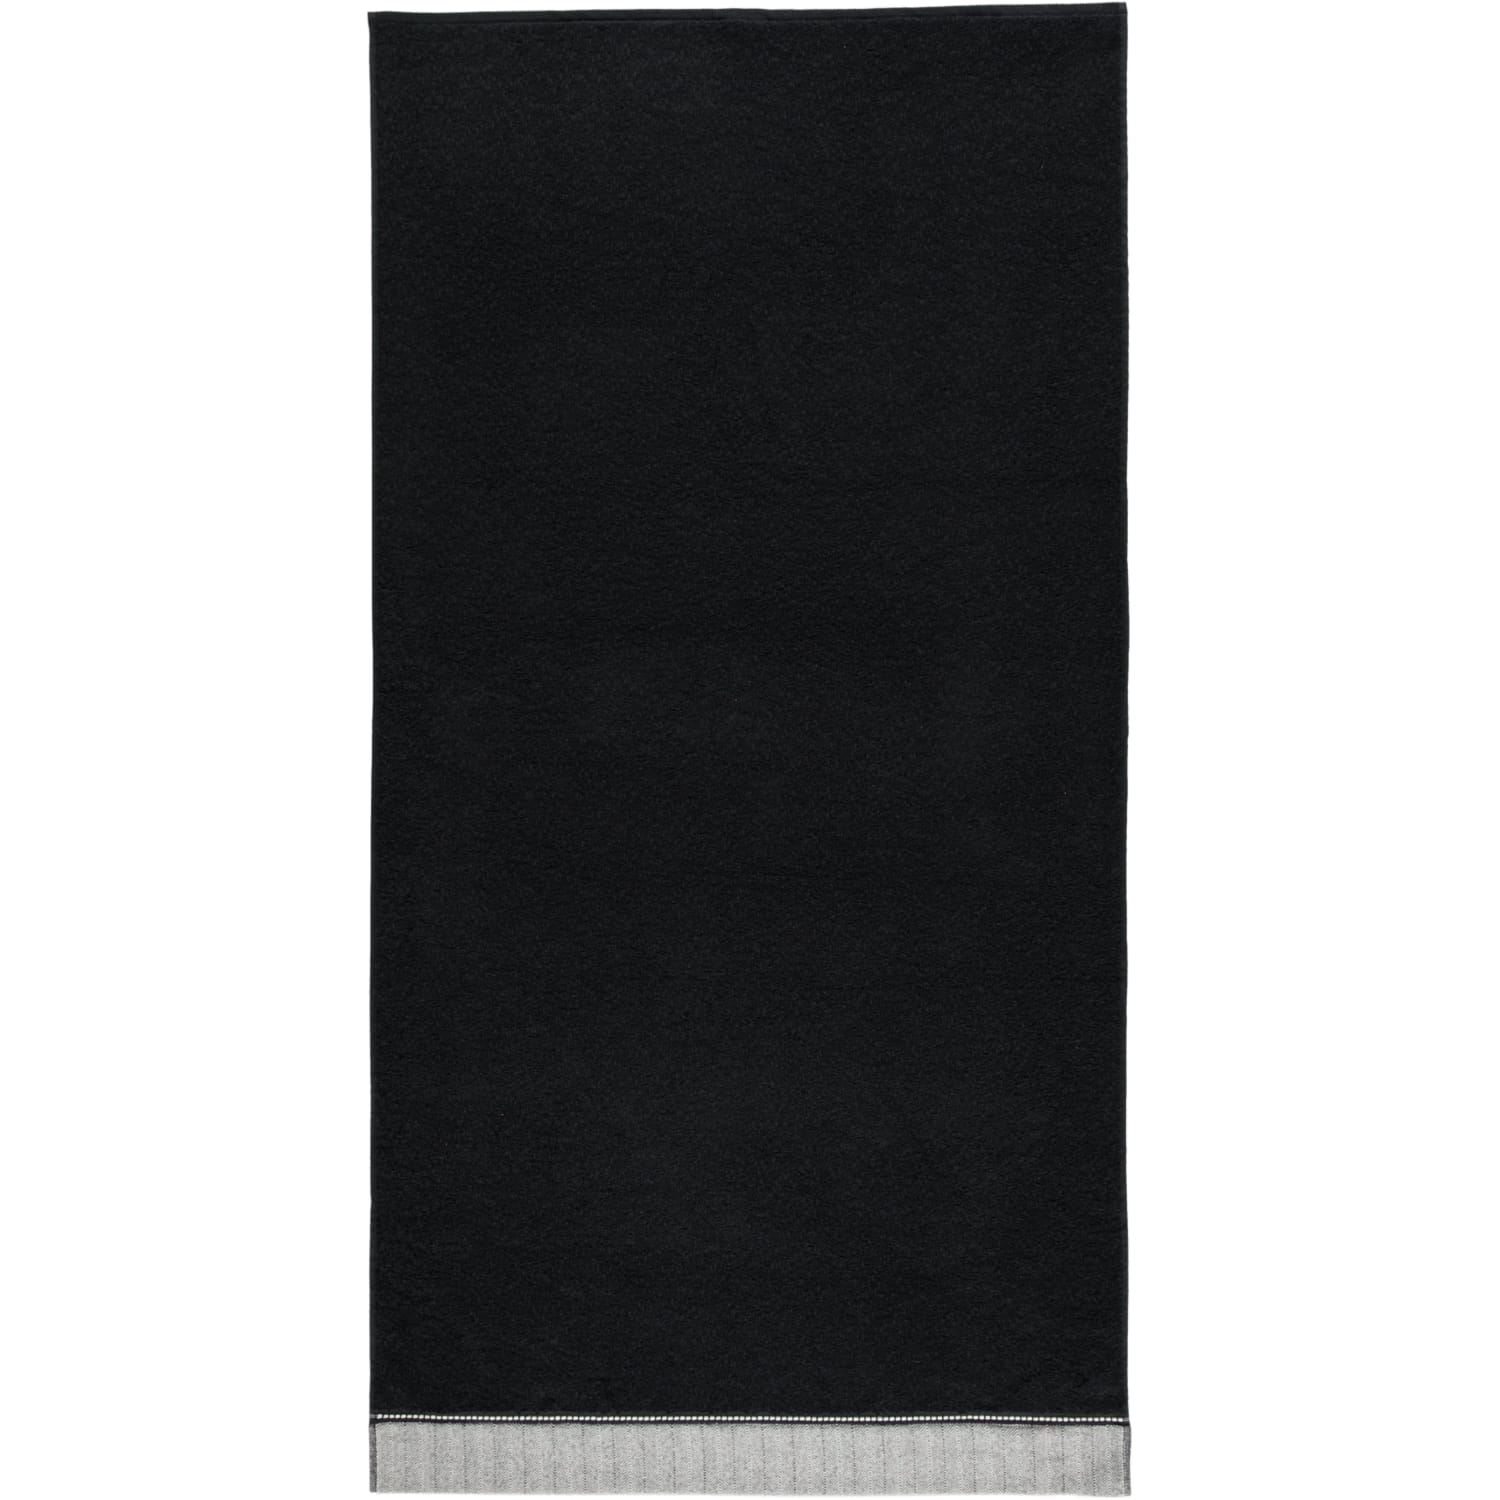 Möve Brooklyn Uni - Farbe: black - 199 (1-0669/8970) - Duschtuch 80x150 cm  | Möve Handtücher | Möve | Marken